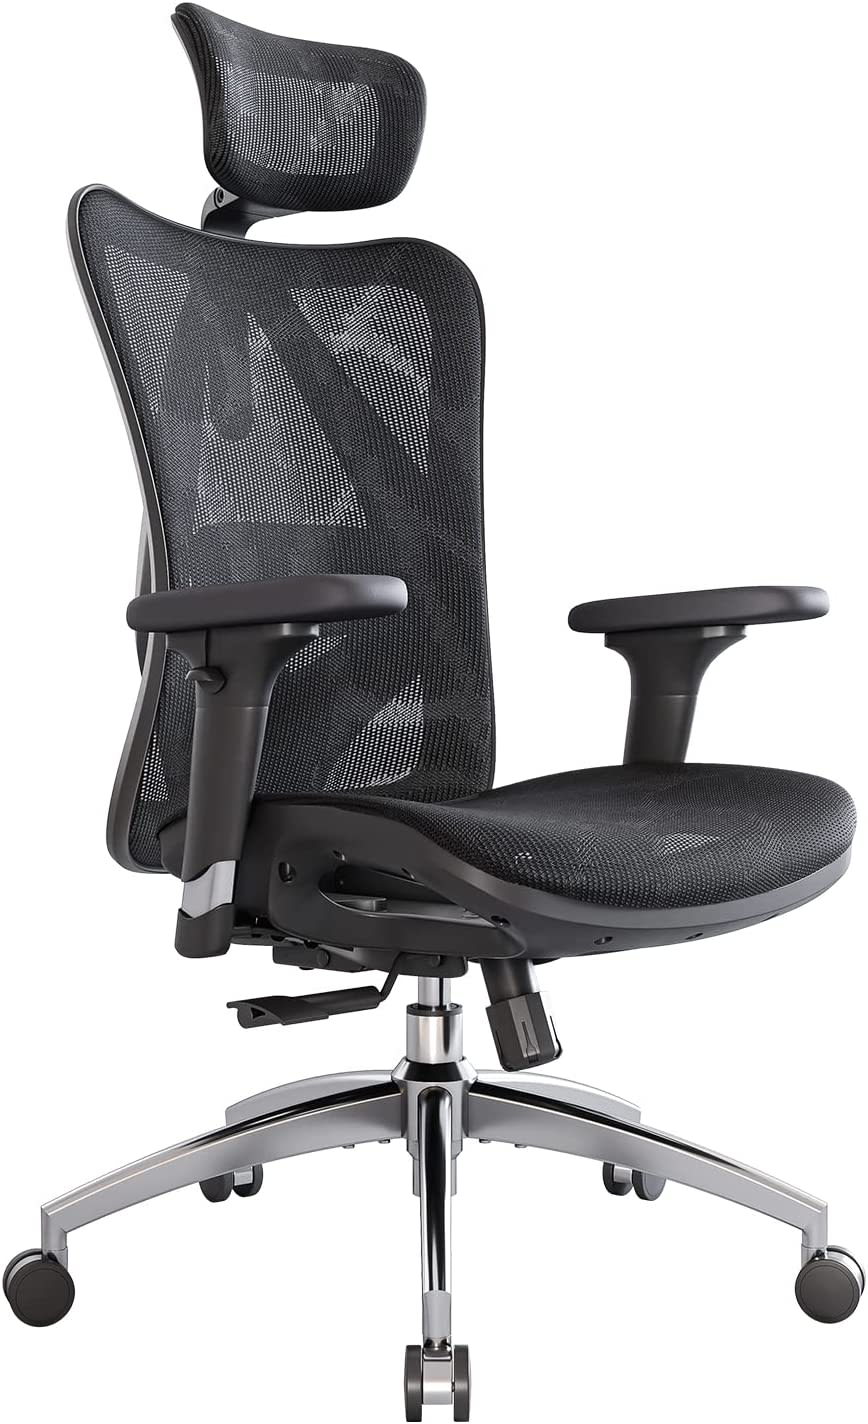 Sihoo M57 Ergonomic Office Chair